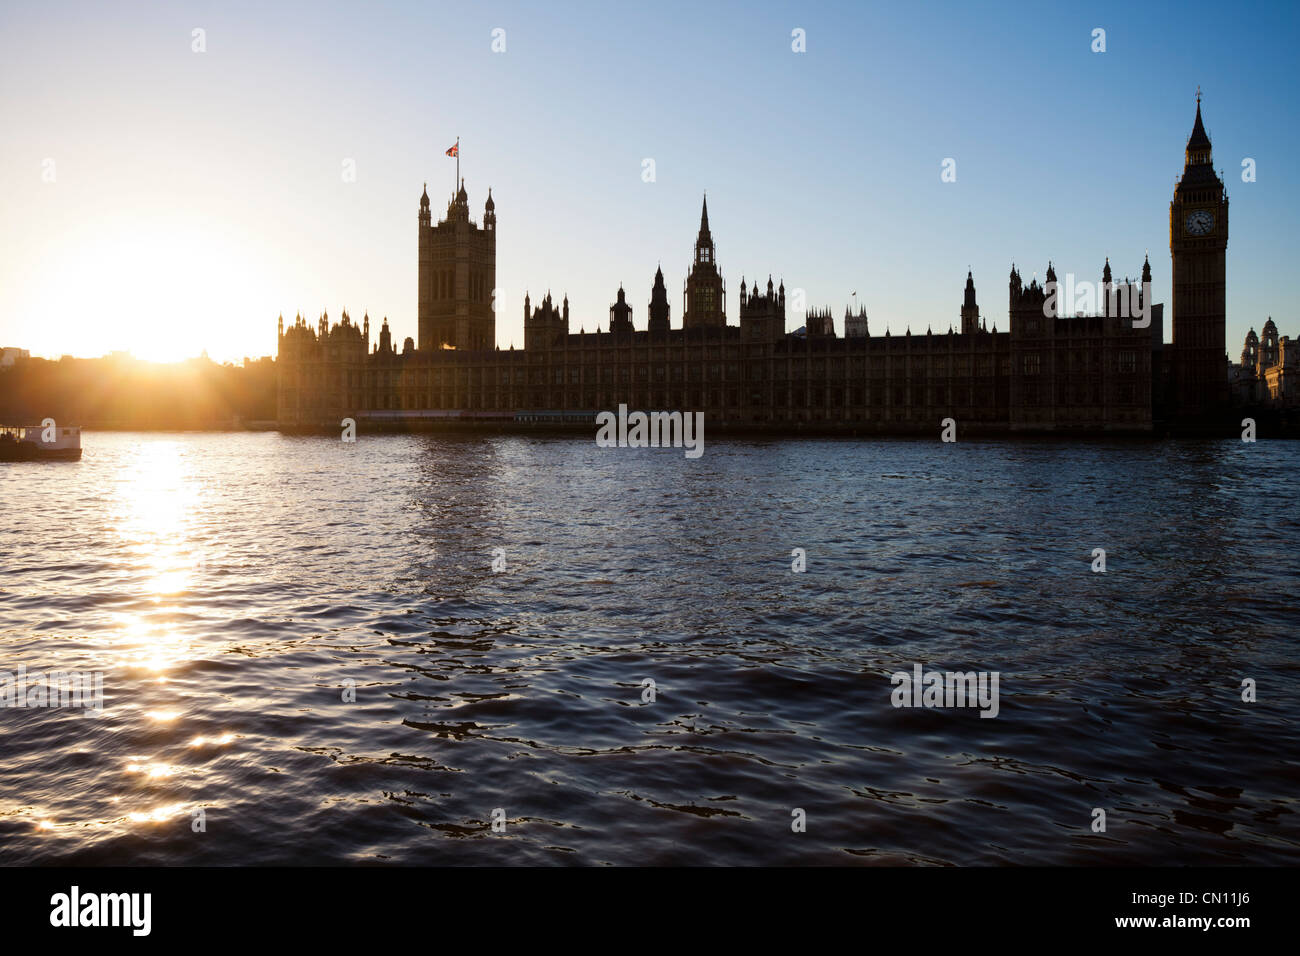 Houses of Parliament, London, UK Stock Photo